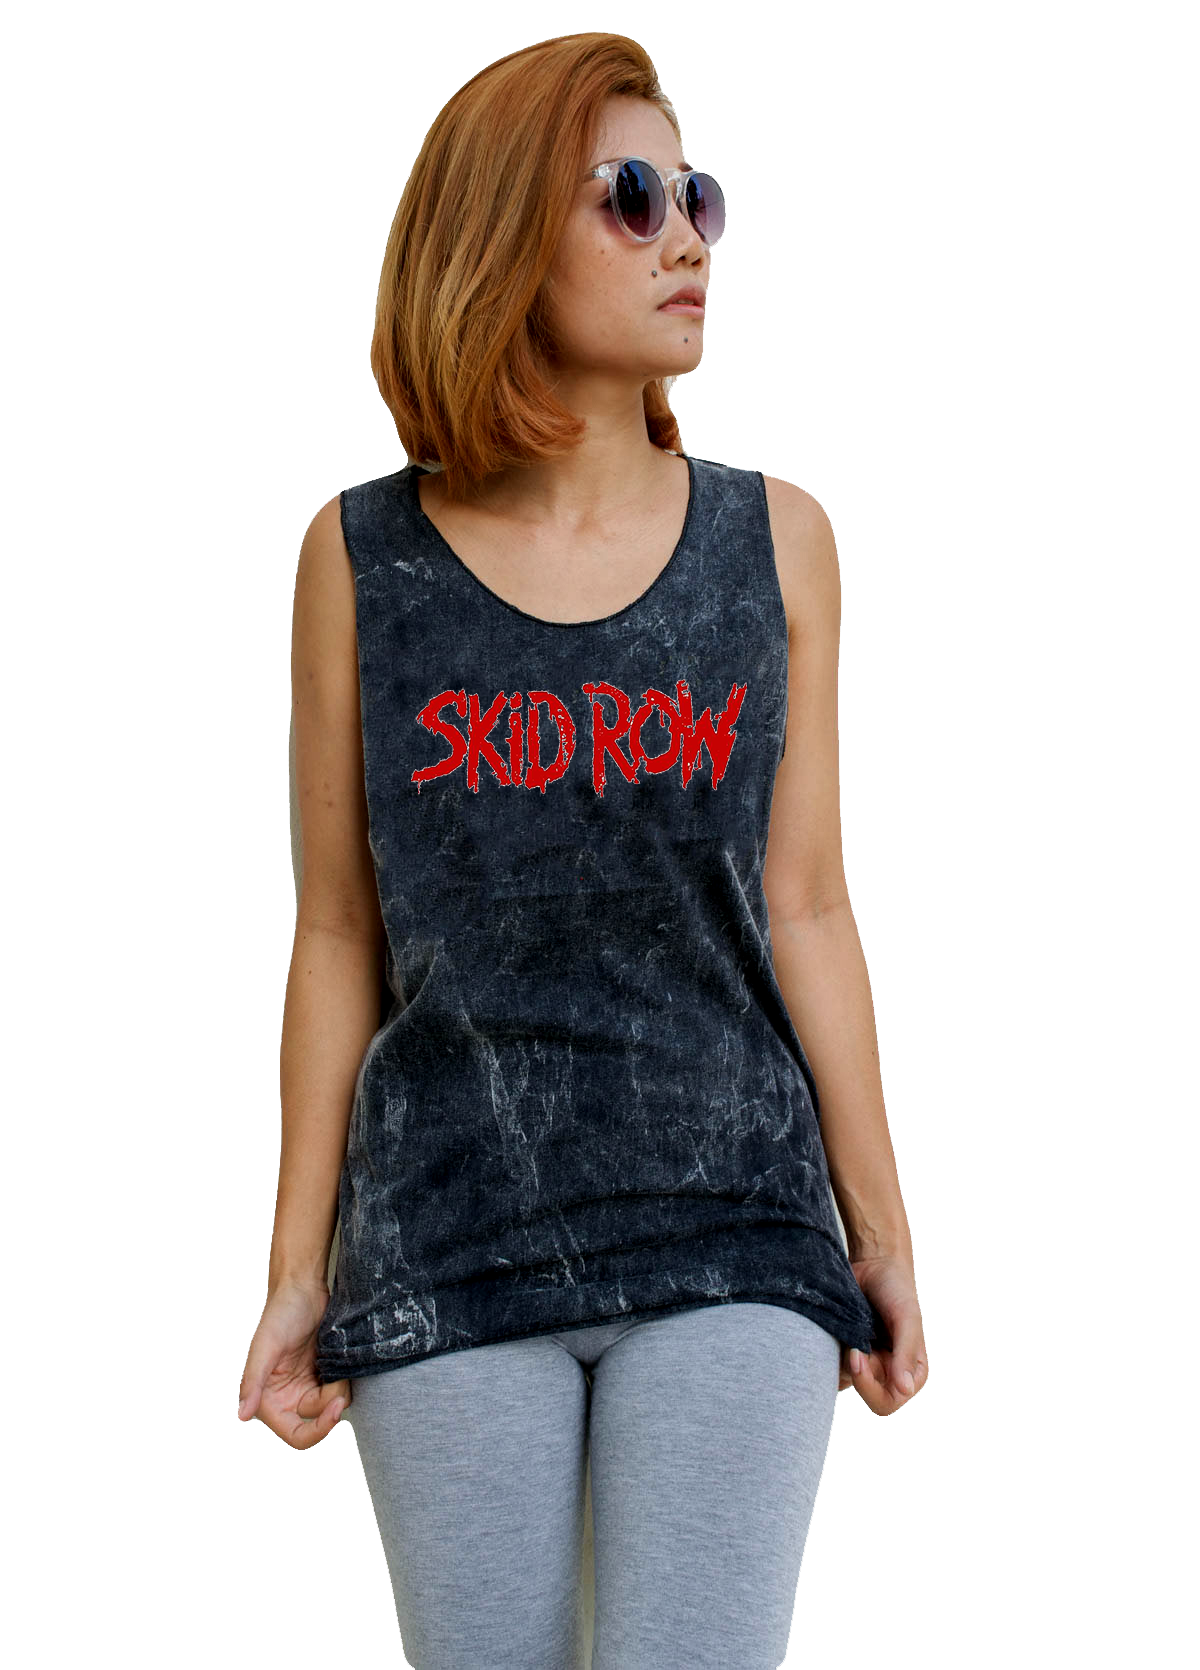 Unisex Skid Row Tank-Top Singlet vest Sleeveless T-shirt